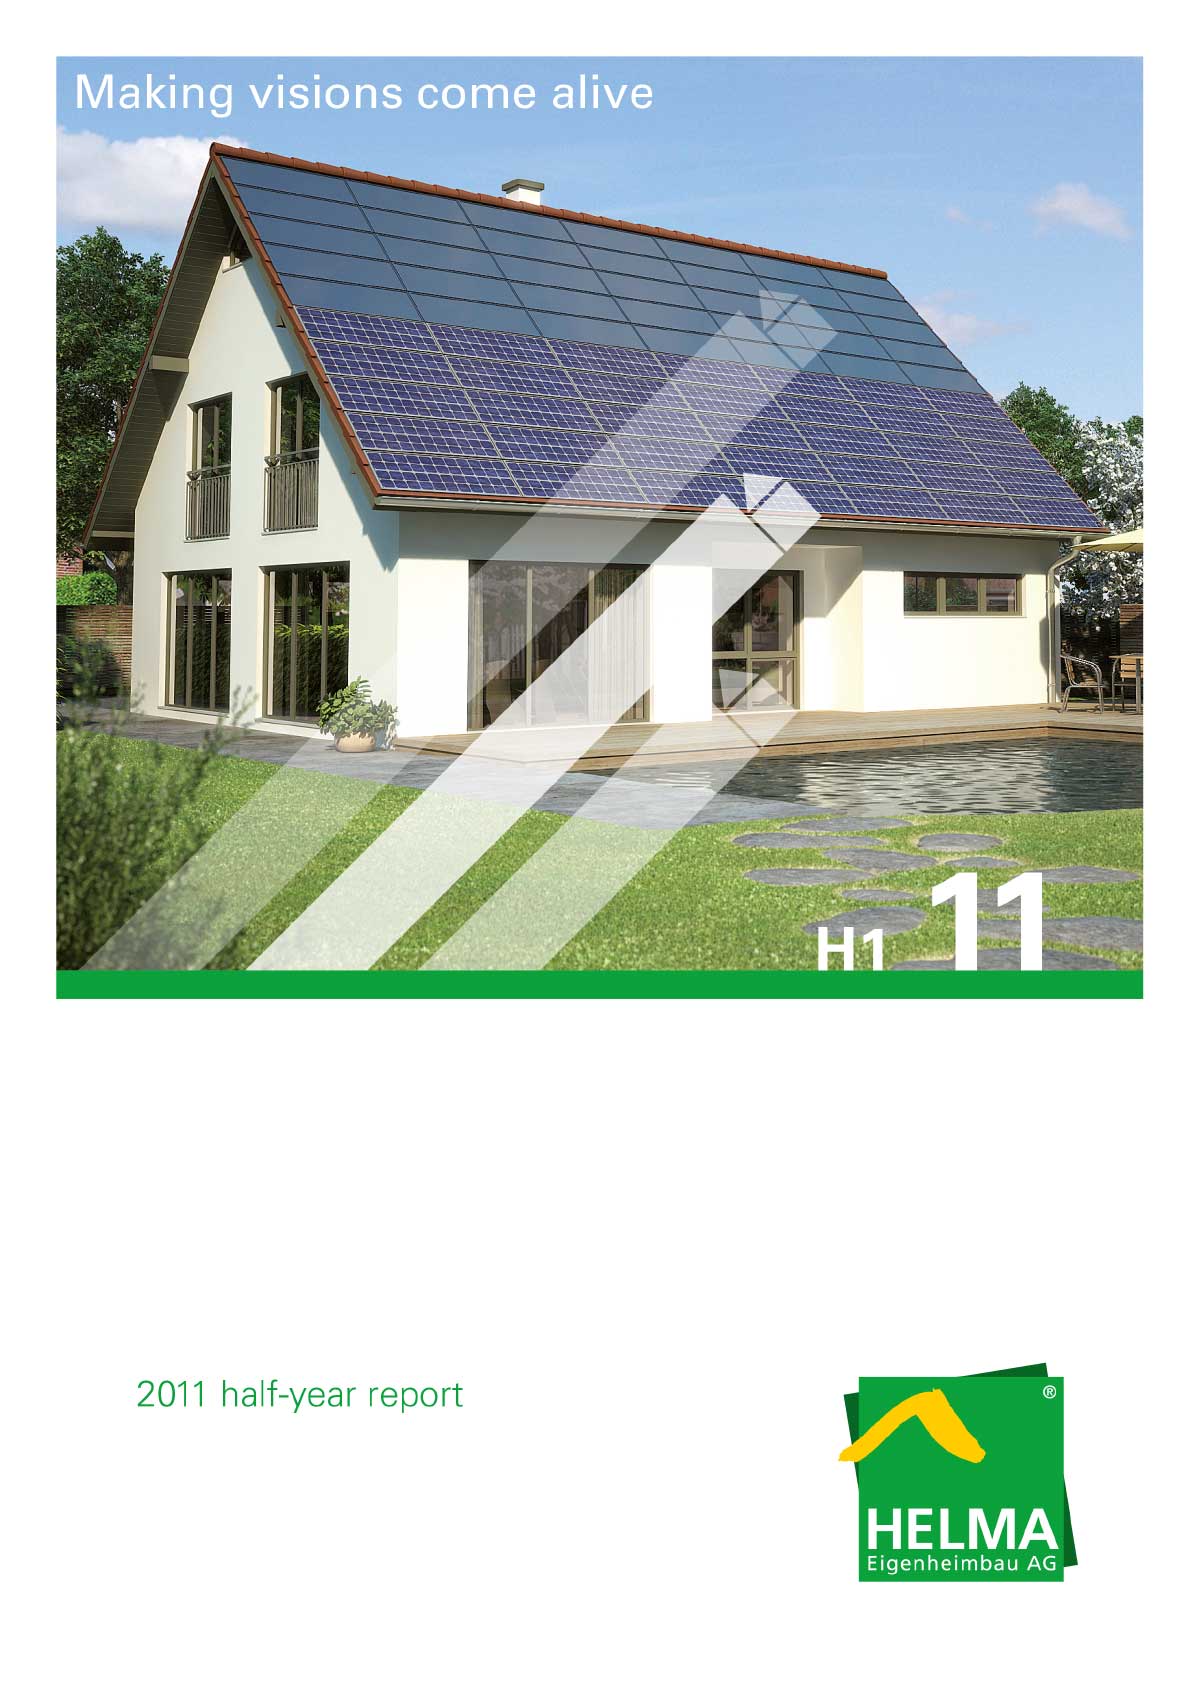 Half-year report 2011